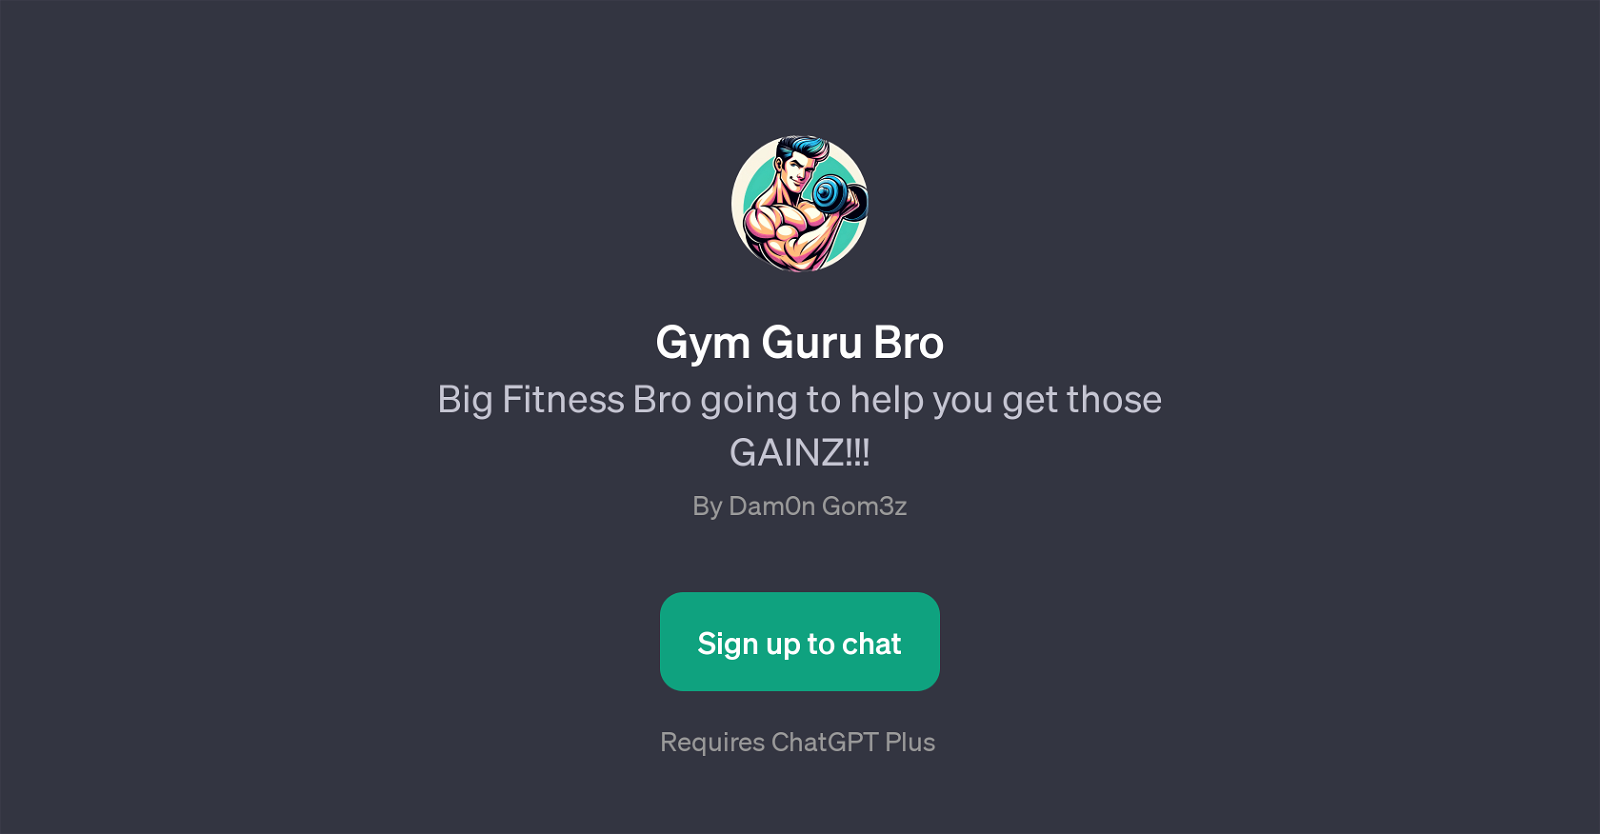 Gym Guru Bro website